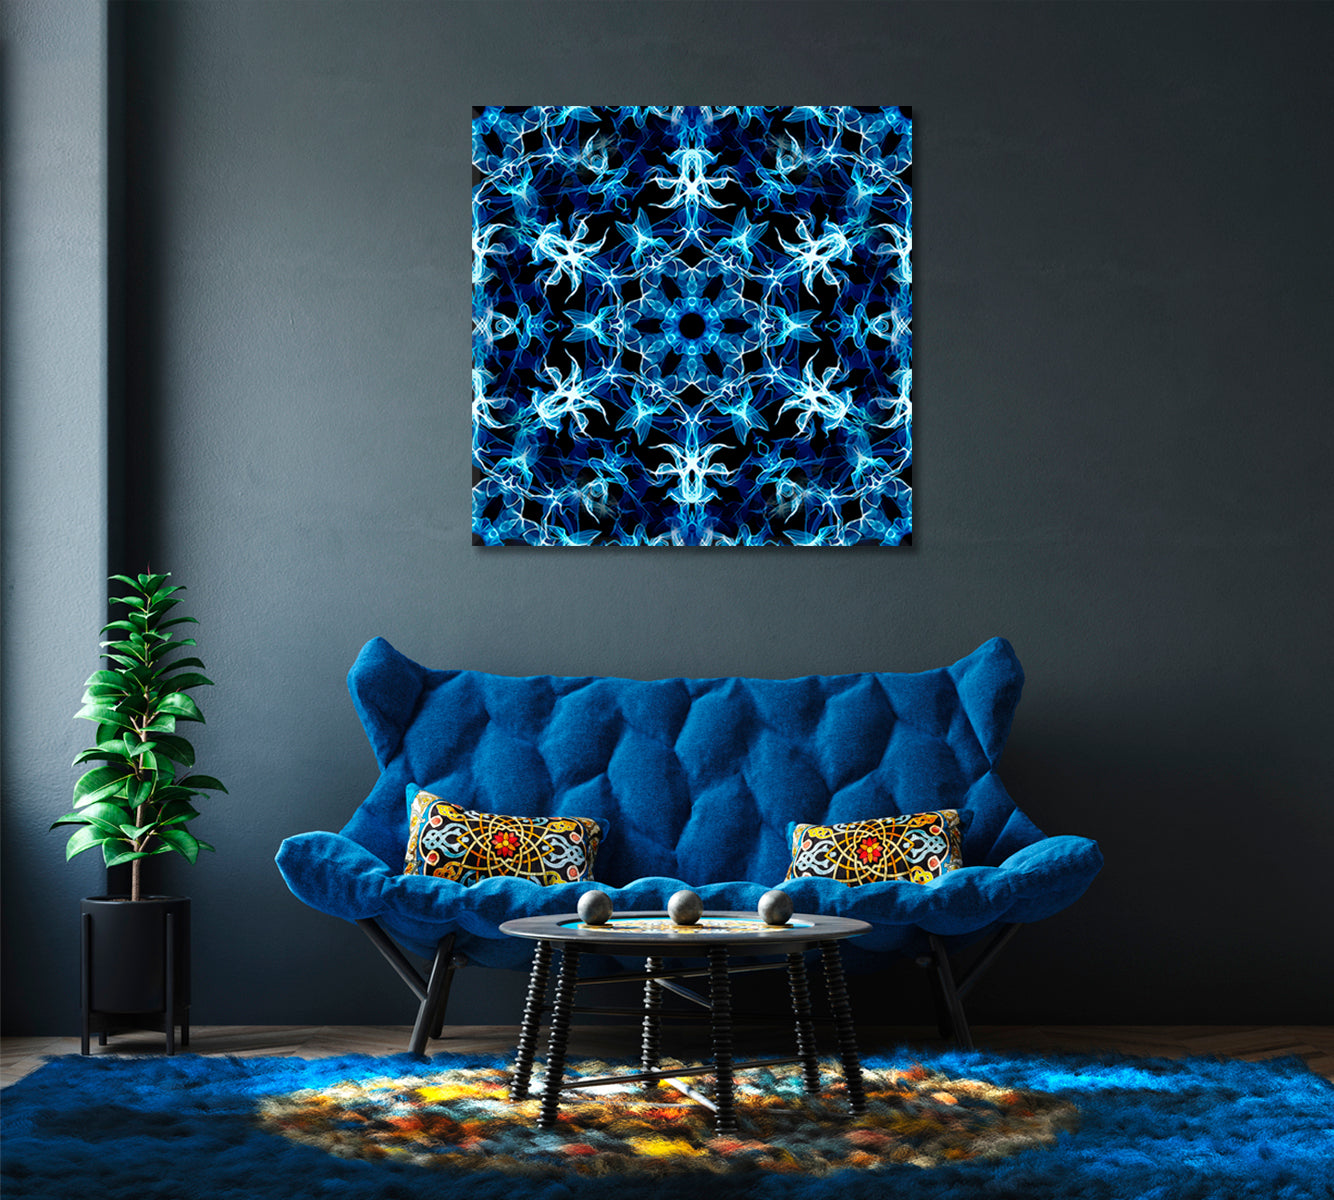 Abstract Blue Kaleidoscope Pattern Canvas Print-Canvas Print-CetArt-1 panel-12x12 inches-CetArt